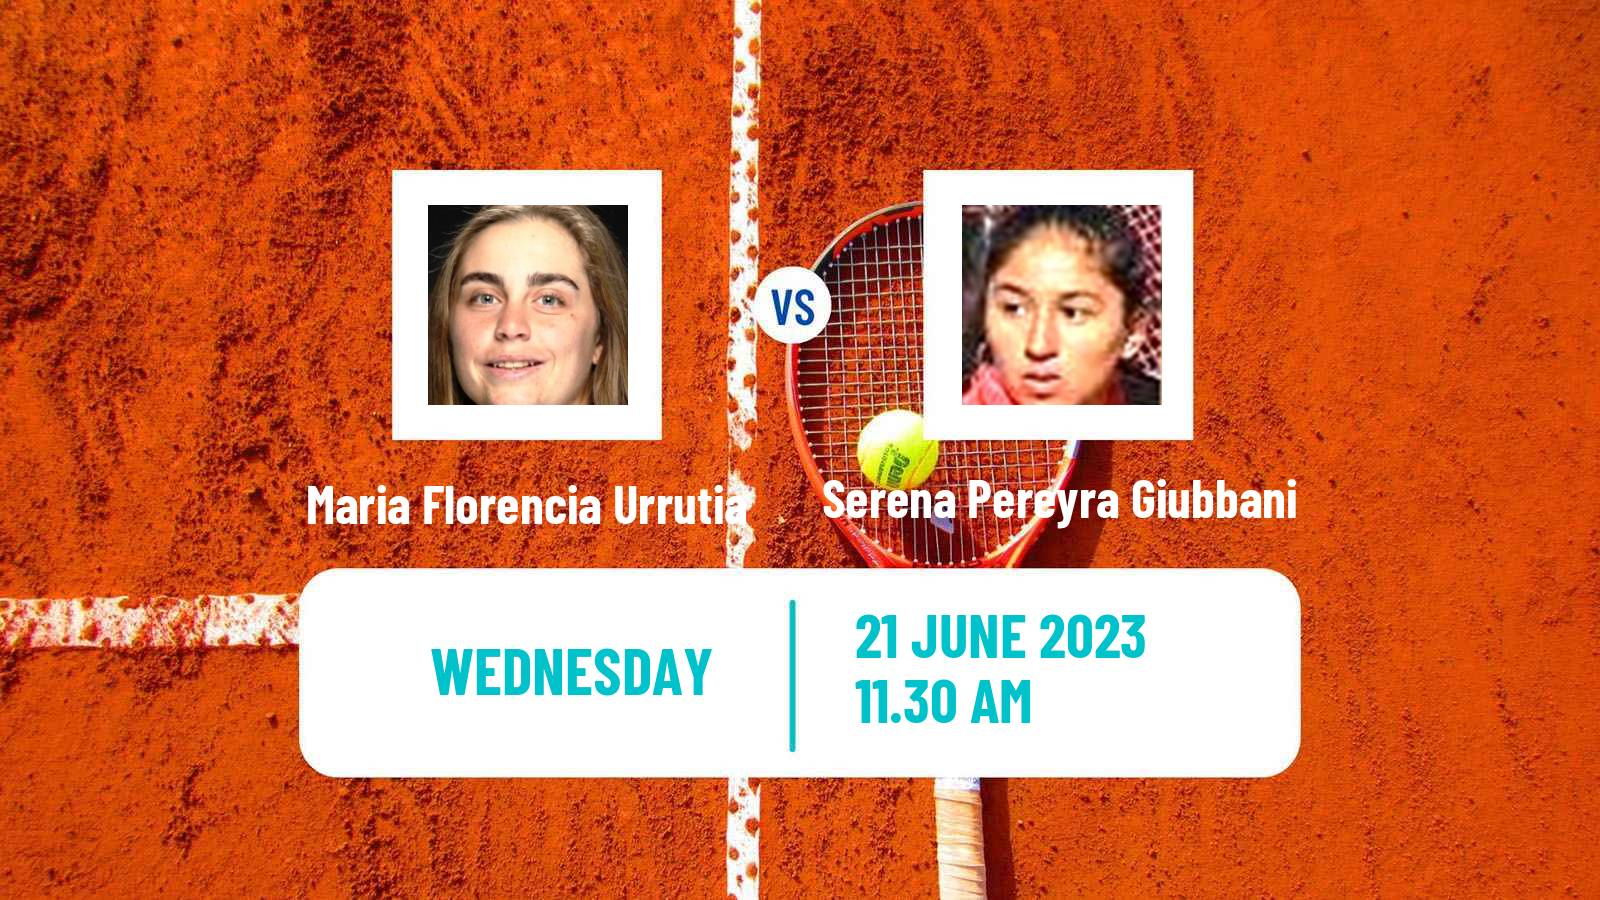 Tennis ITF W15 Buenos Aires Women Maria Florencia Urrutia - Serena Pereyra Giubbani